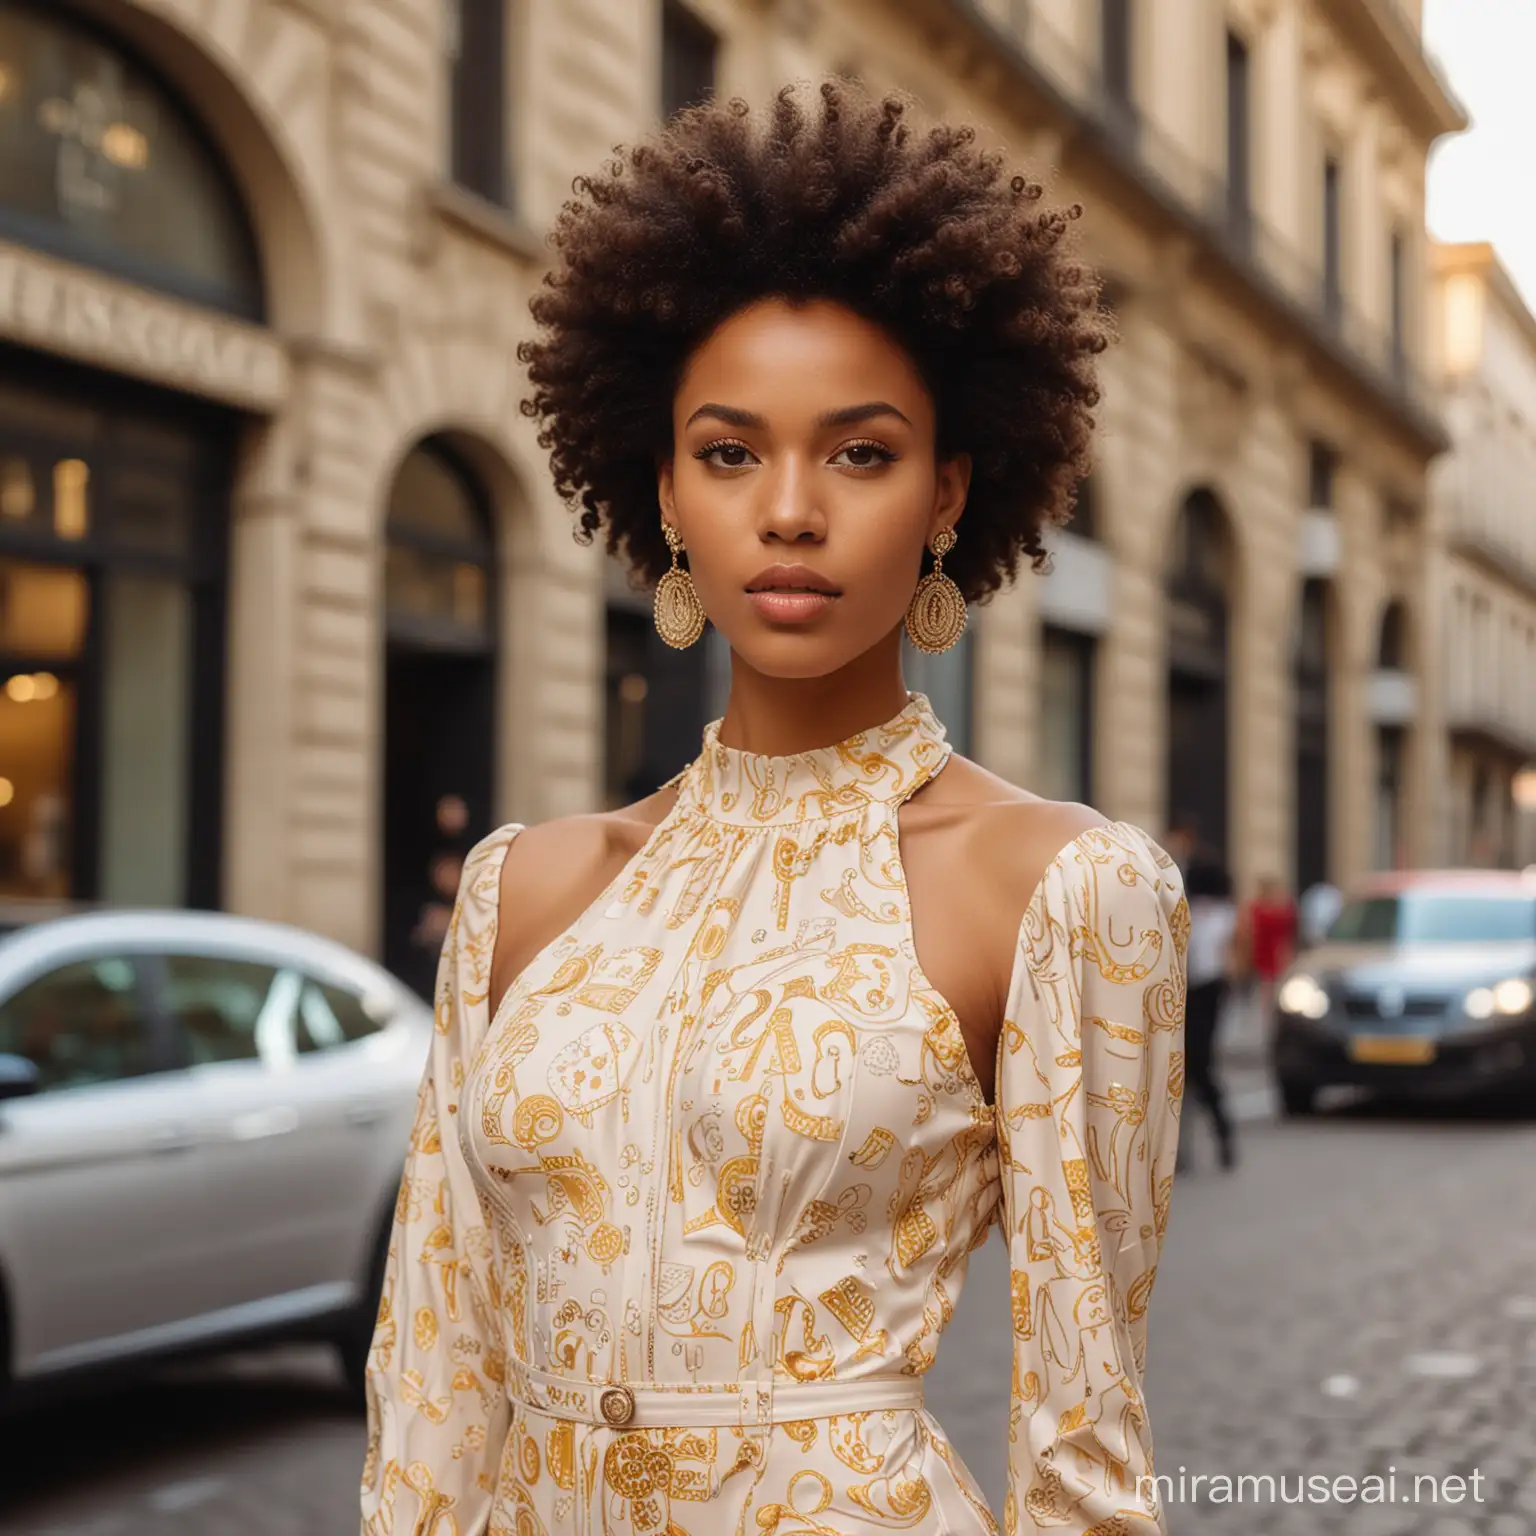 Chic MixedRace Supermodel in Versace Dress Milan Street Photoshoot